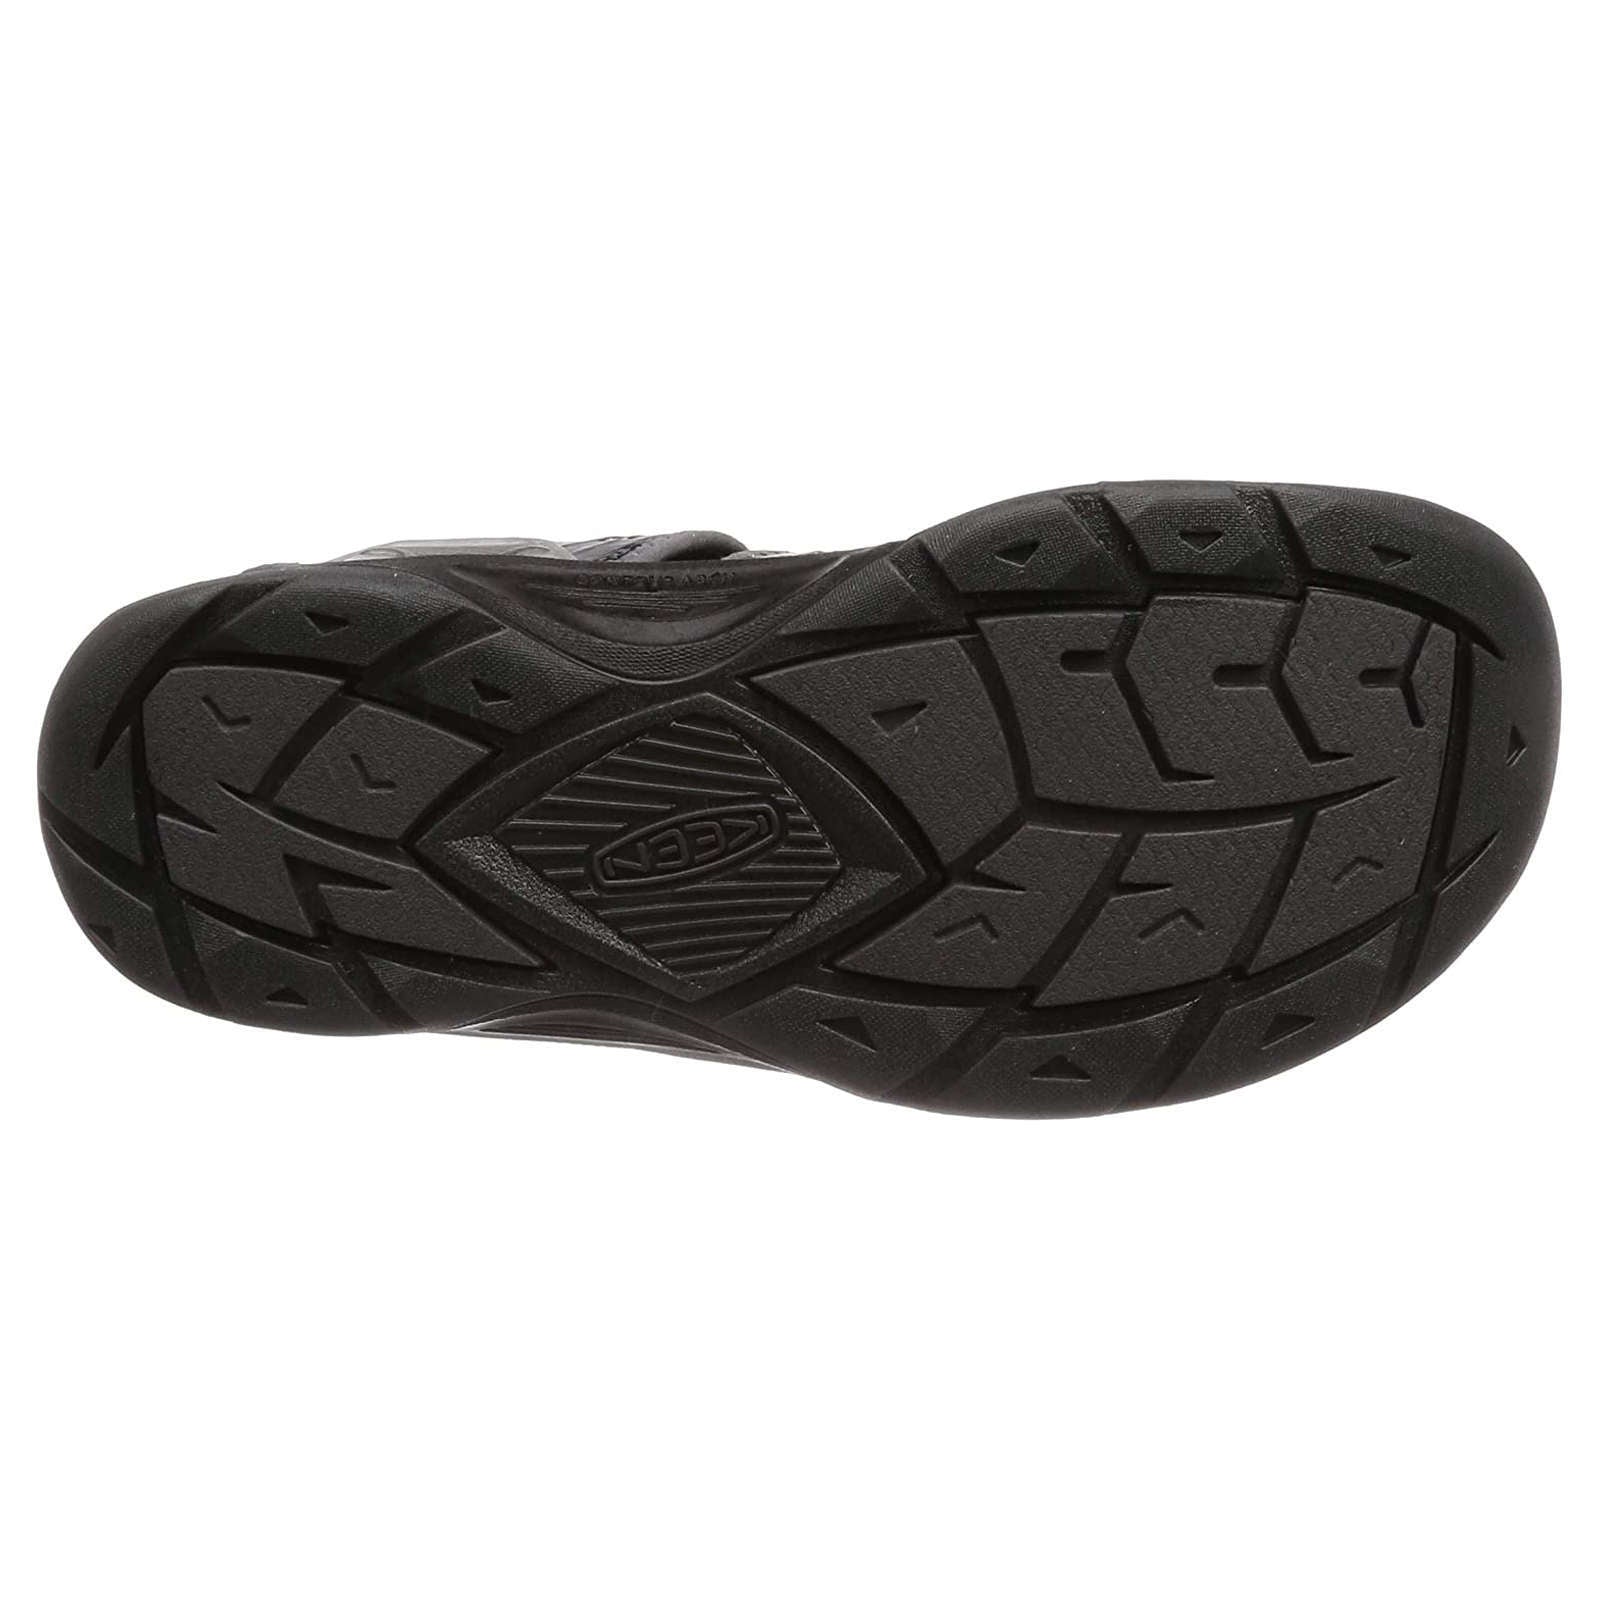 Keen Evofit One Textile Men's Hiking Sandals#color_heathered black